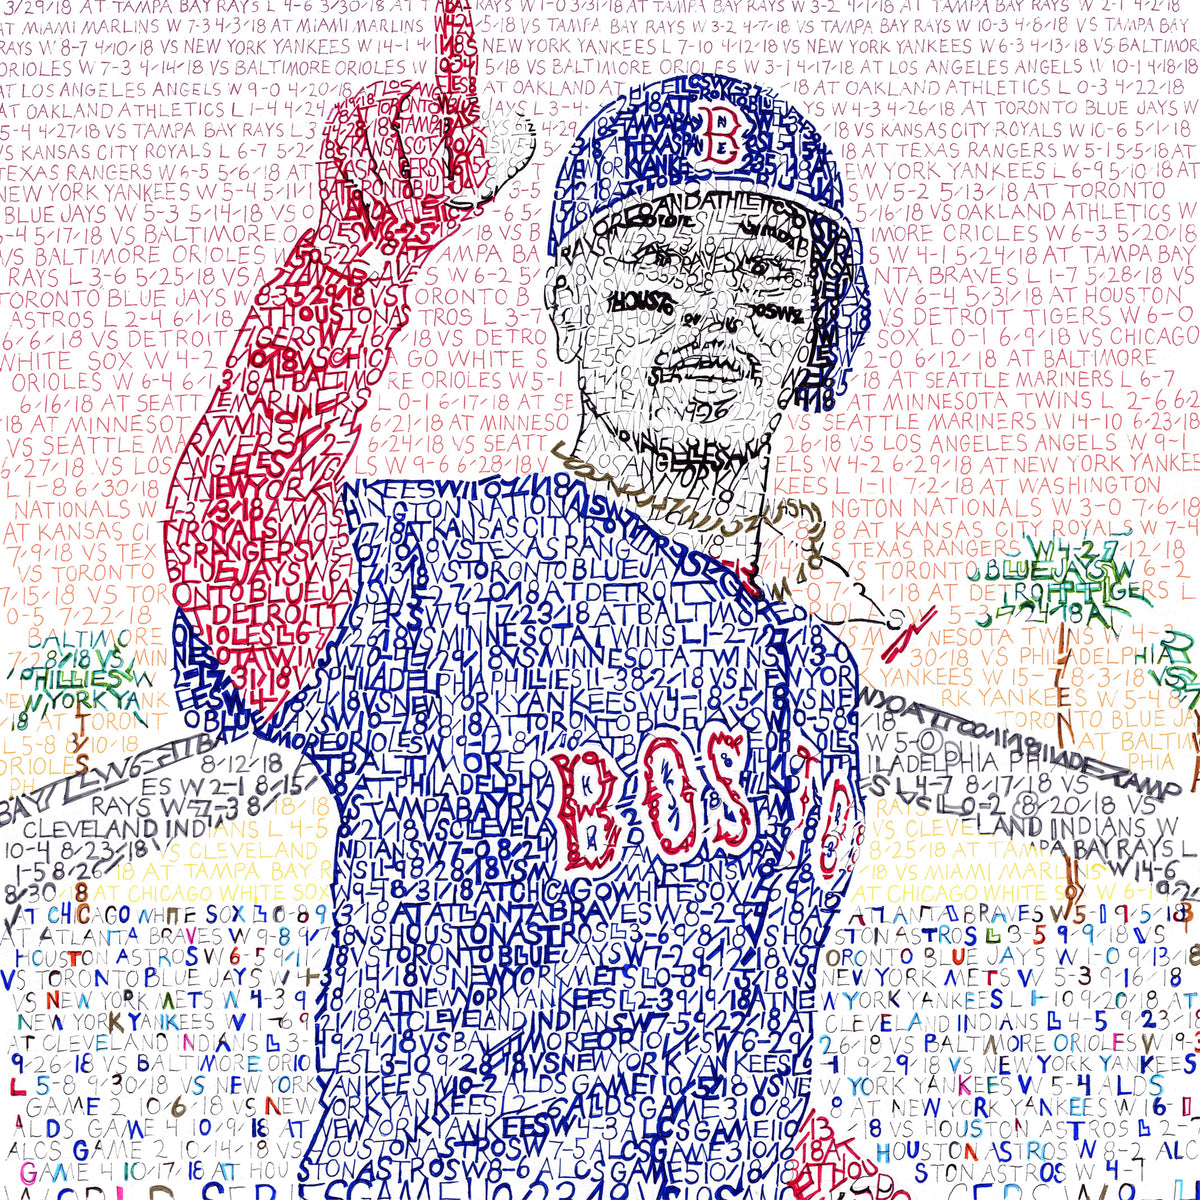  Mookie Betts Boston Red Sox Poster Print, Baseball